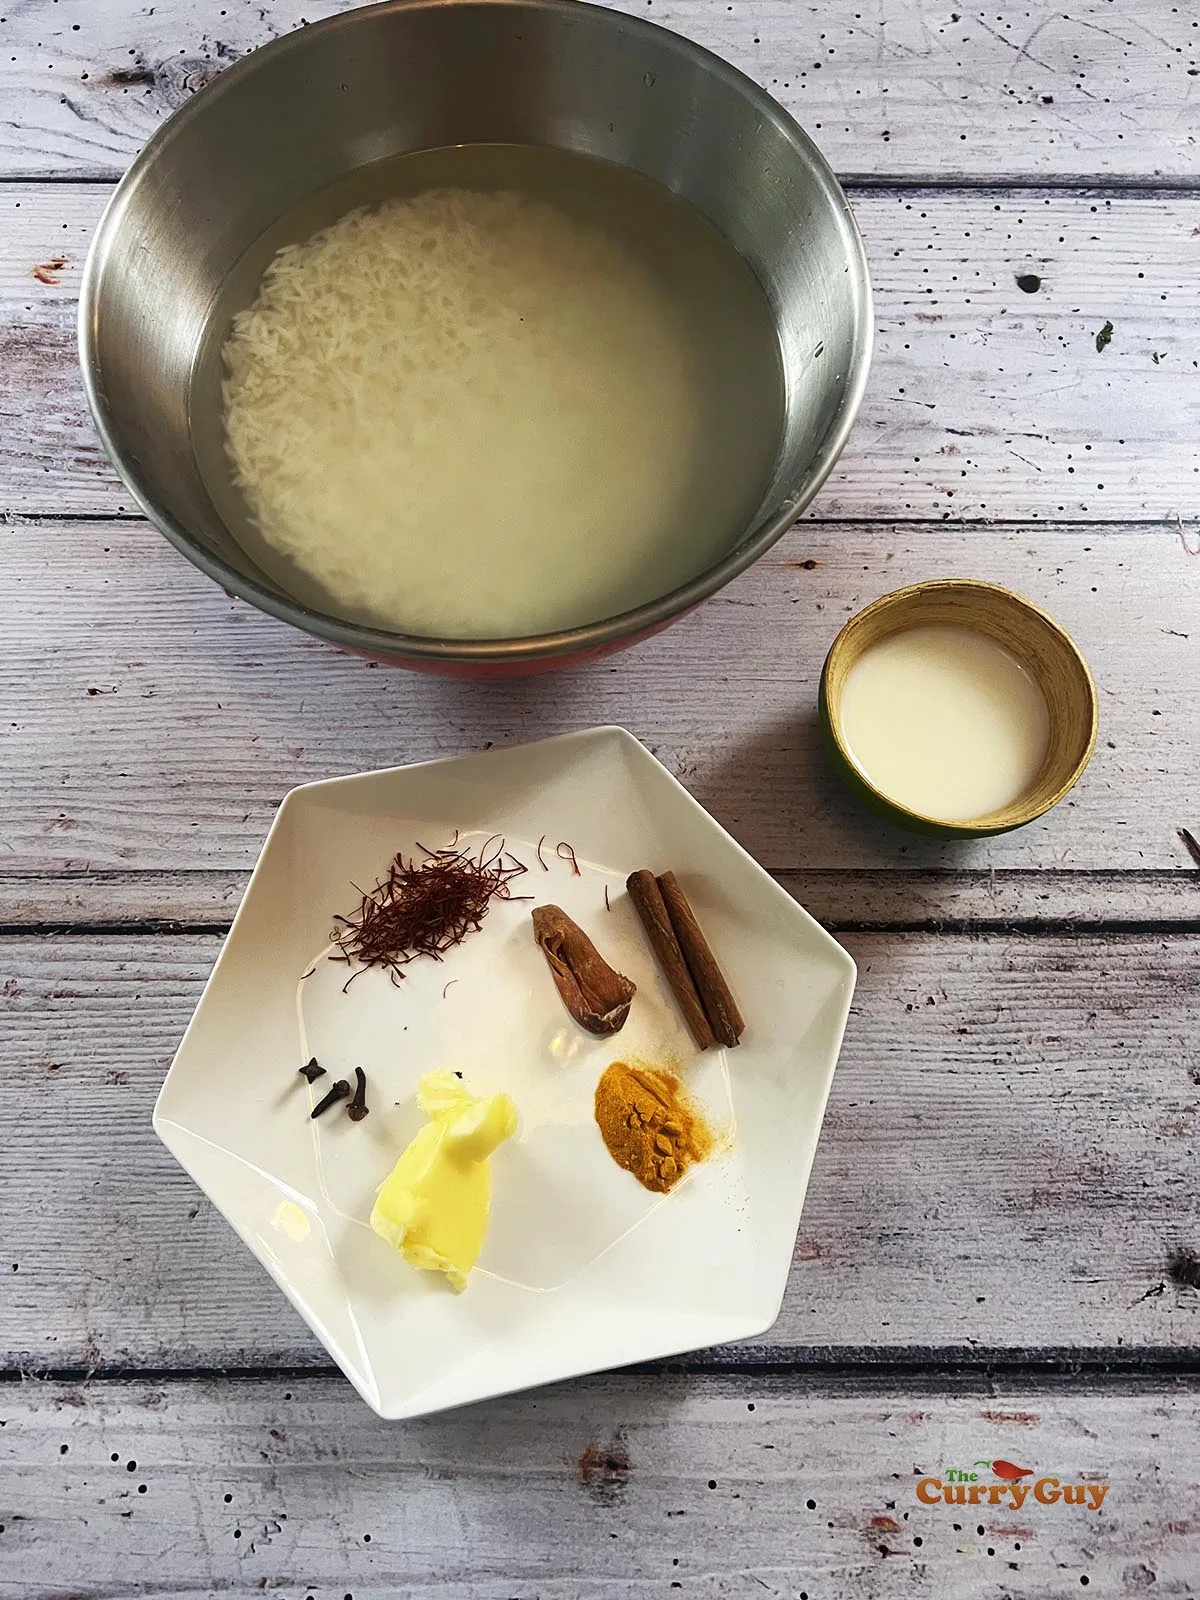 Ingredients for this saffron rice recipe